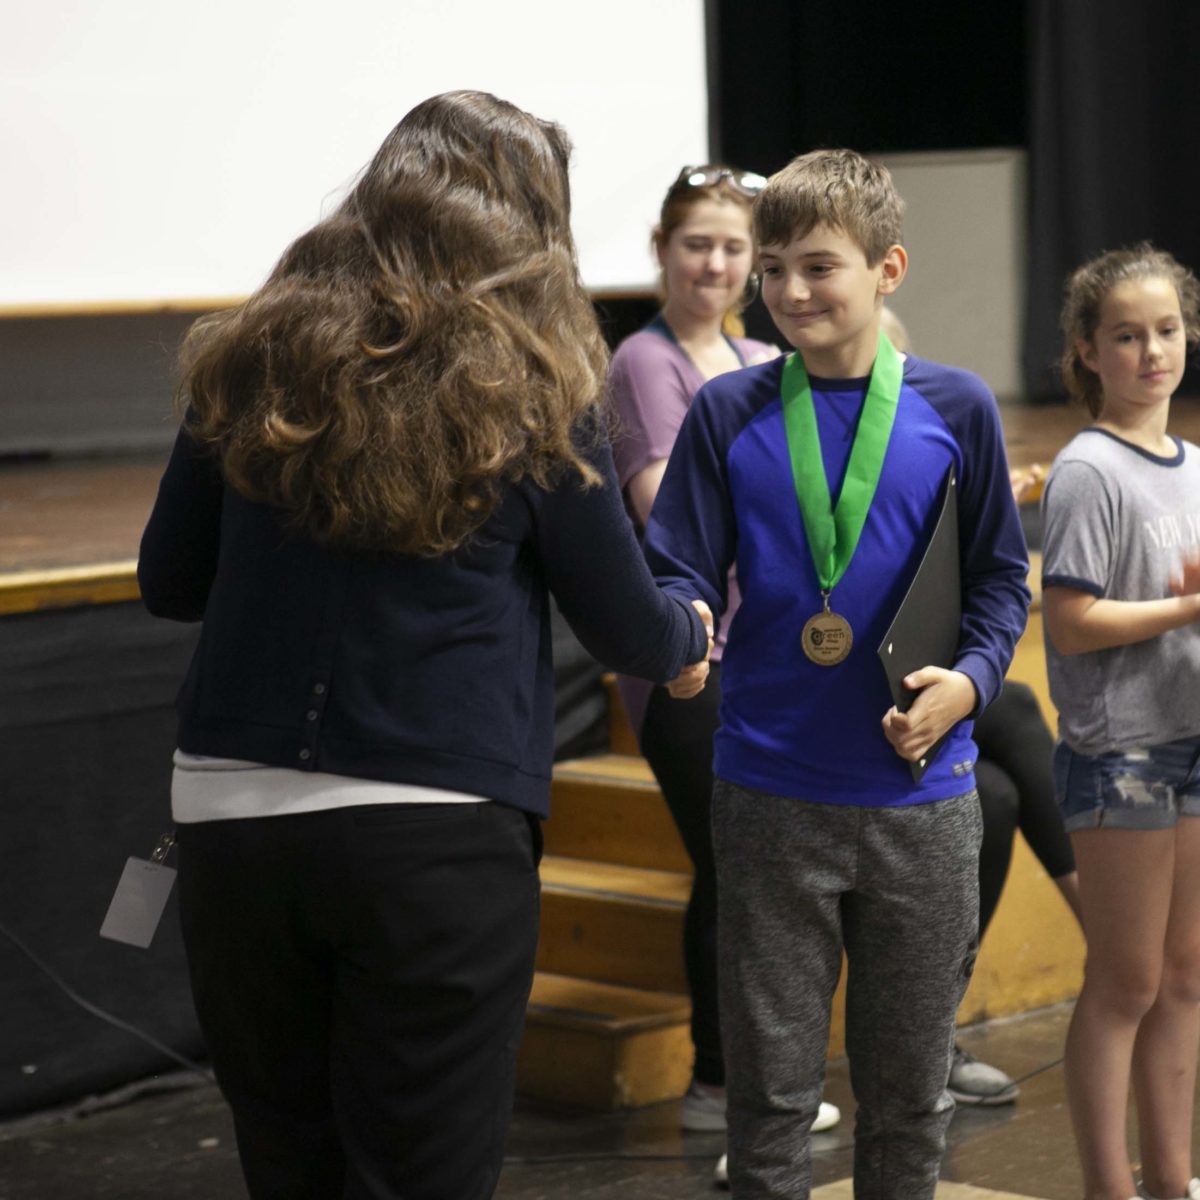 Finn shakes hands while receiving his Green medalist award